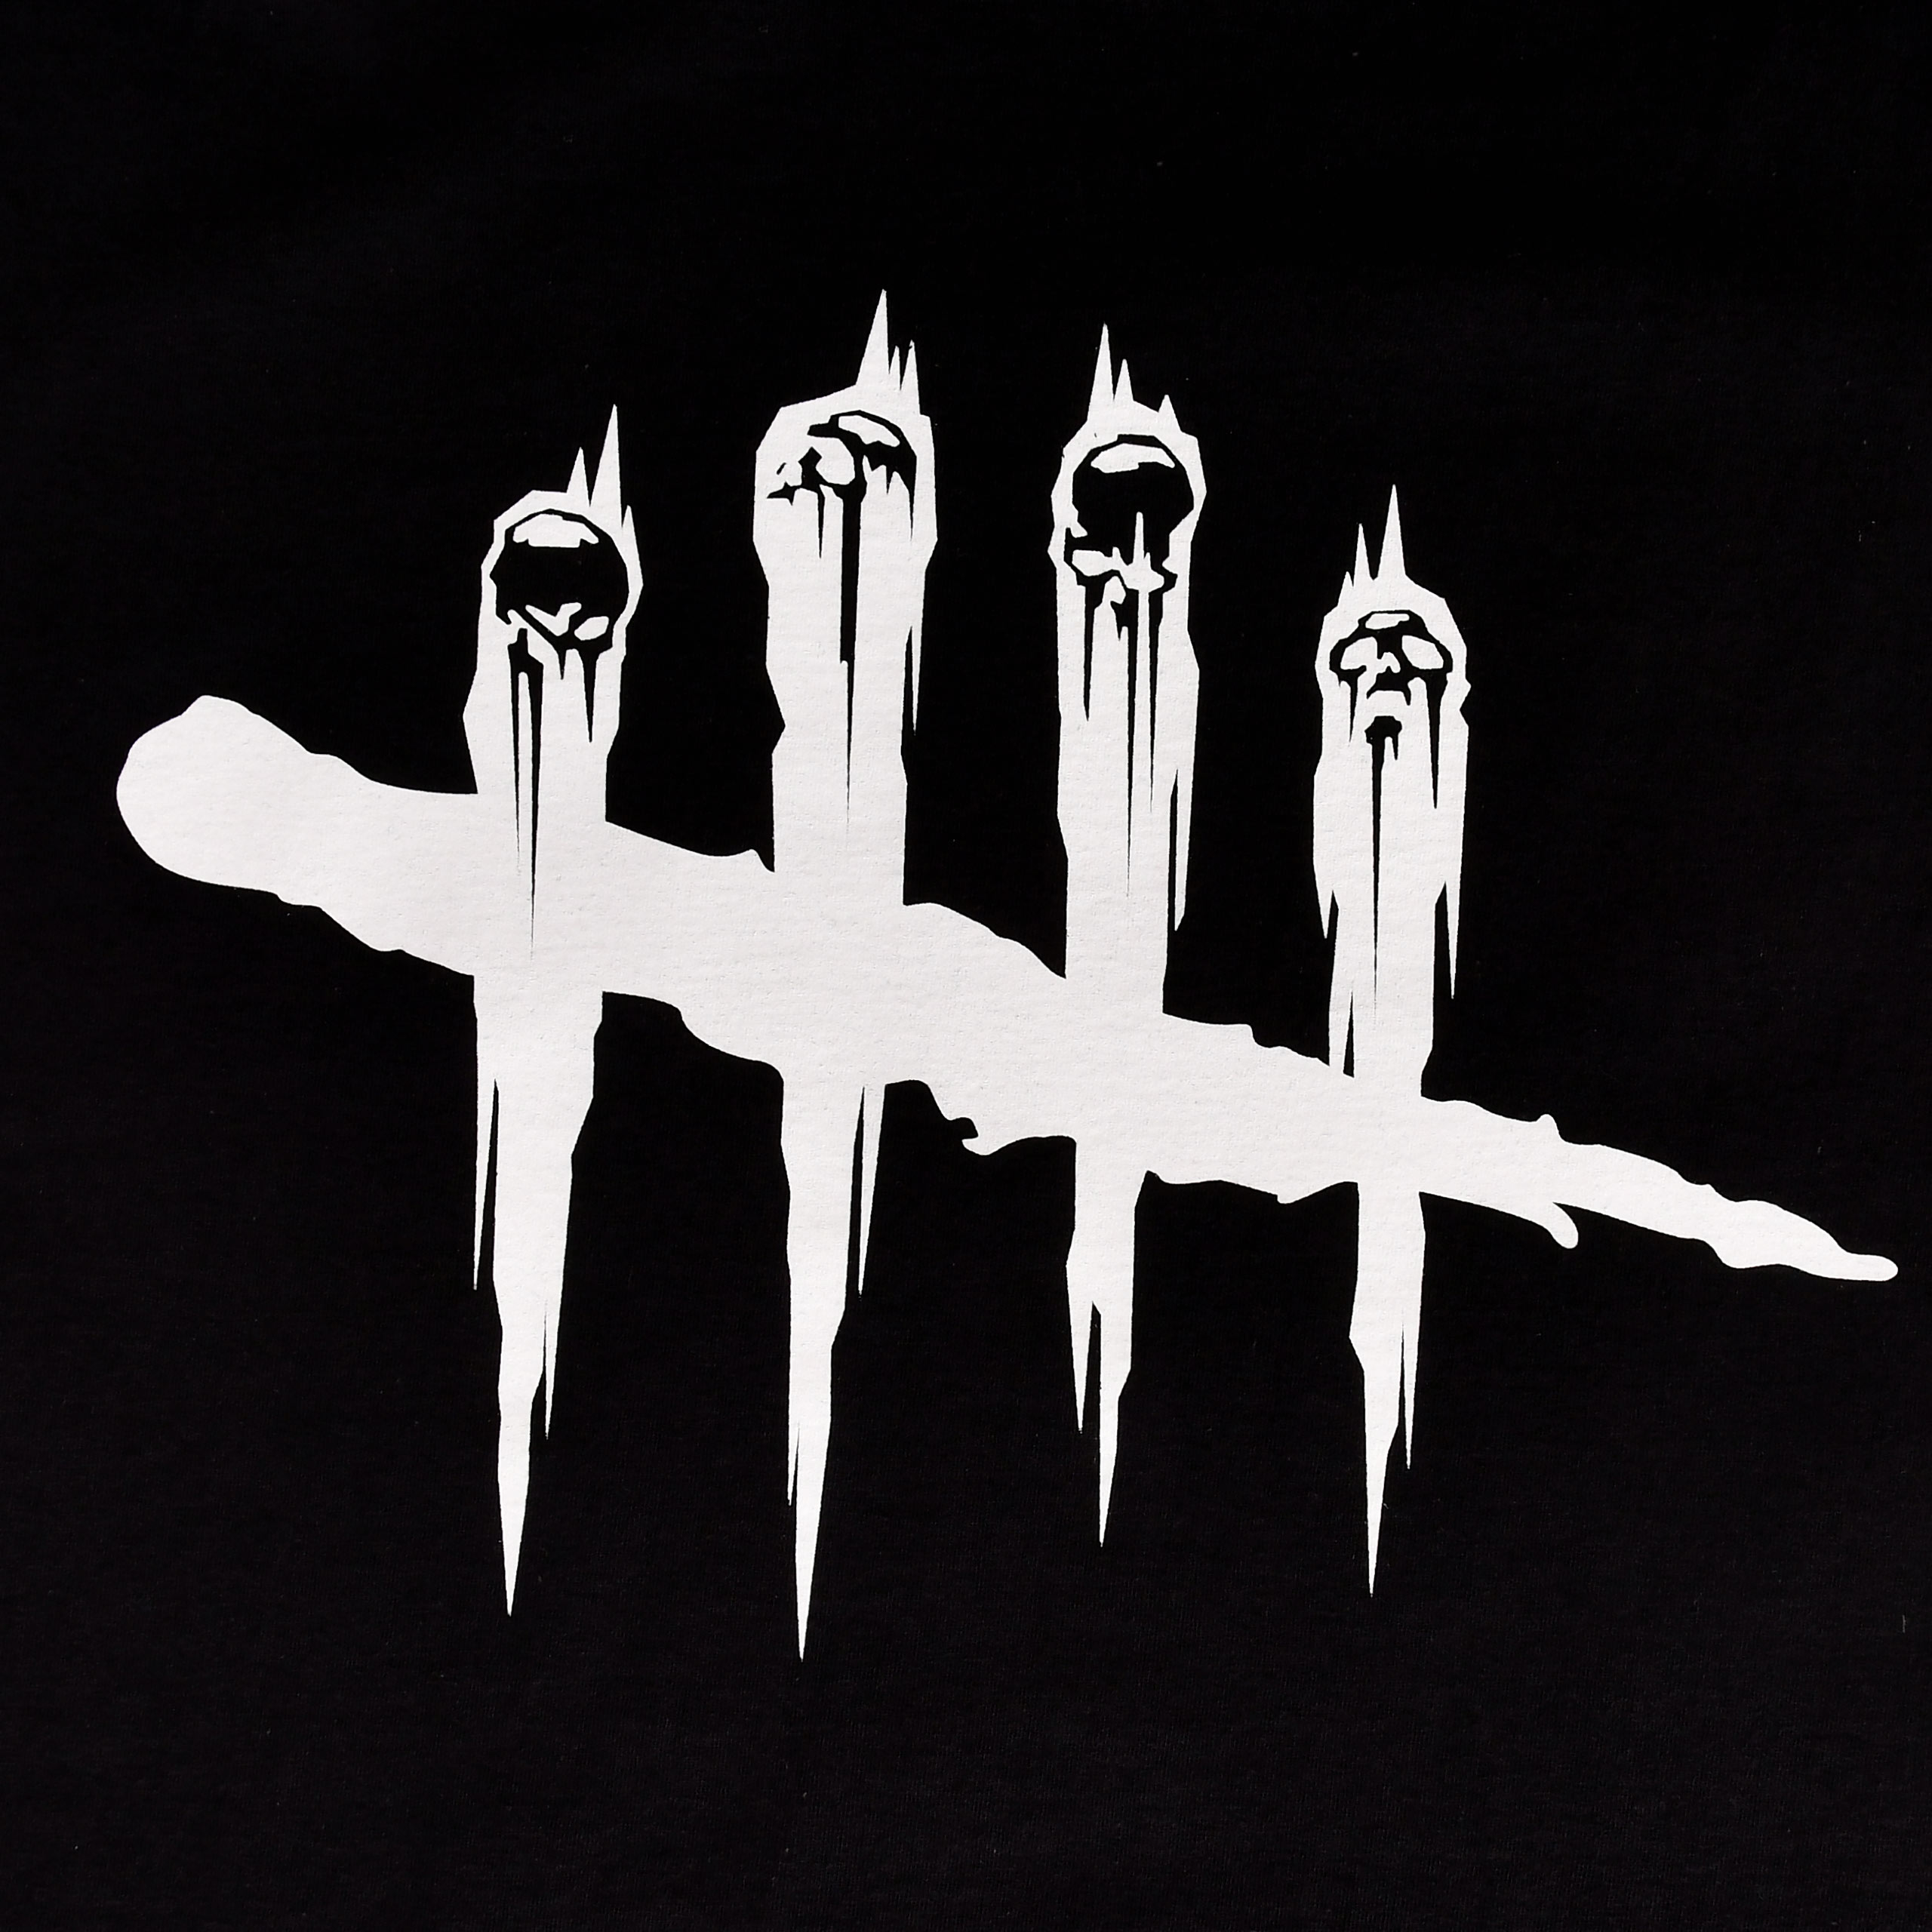 Dead by Daylight - Slashes T-Shirt schwarz